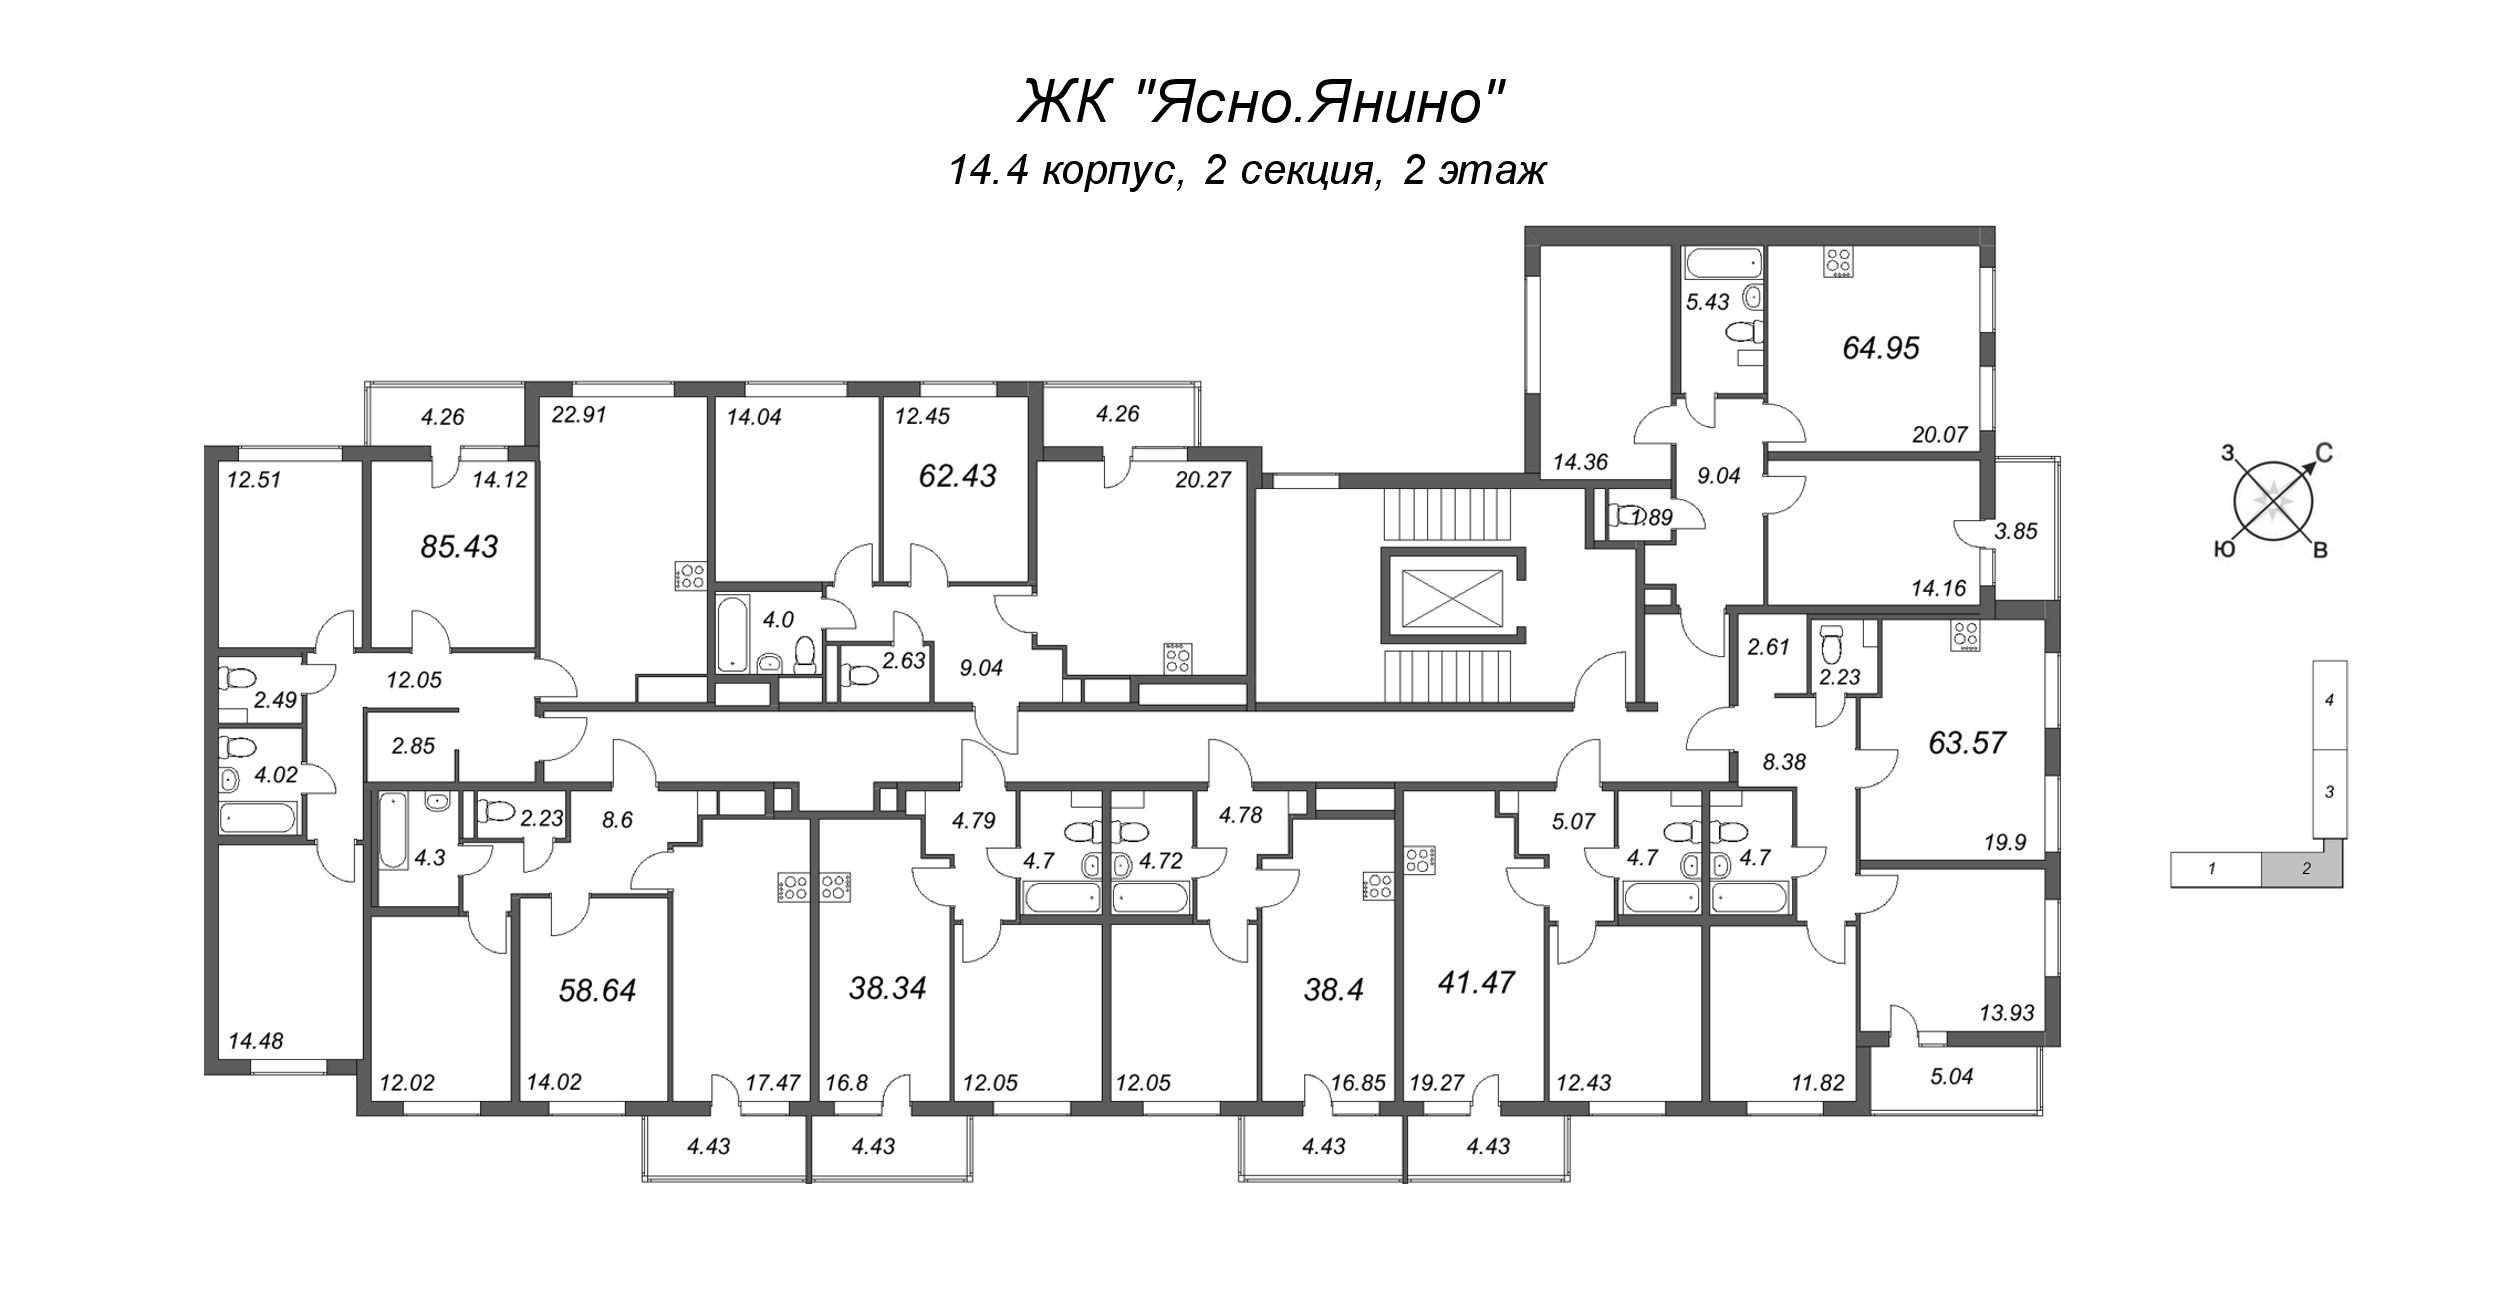 2-комнатная (Евро) квартира, 38.34 м² в ЖК "Ясно.Янино" - планировка этажа